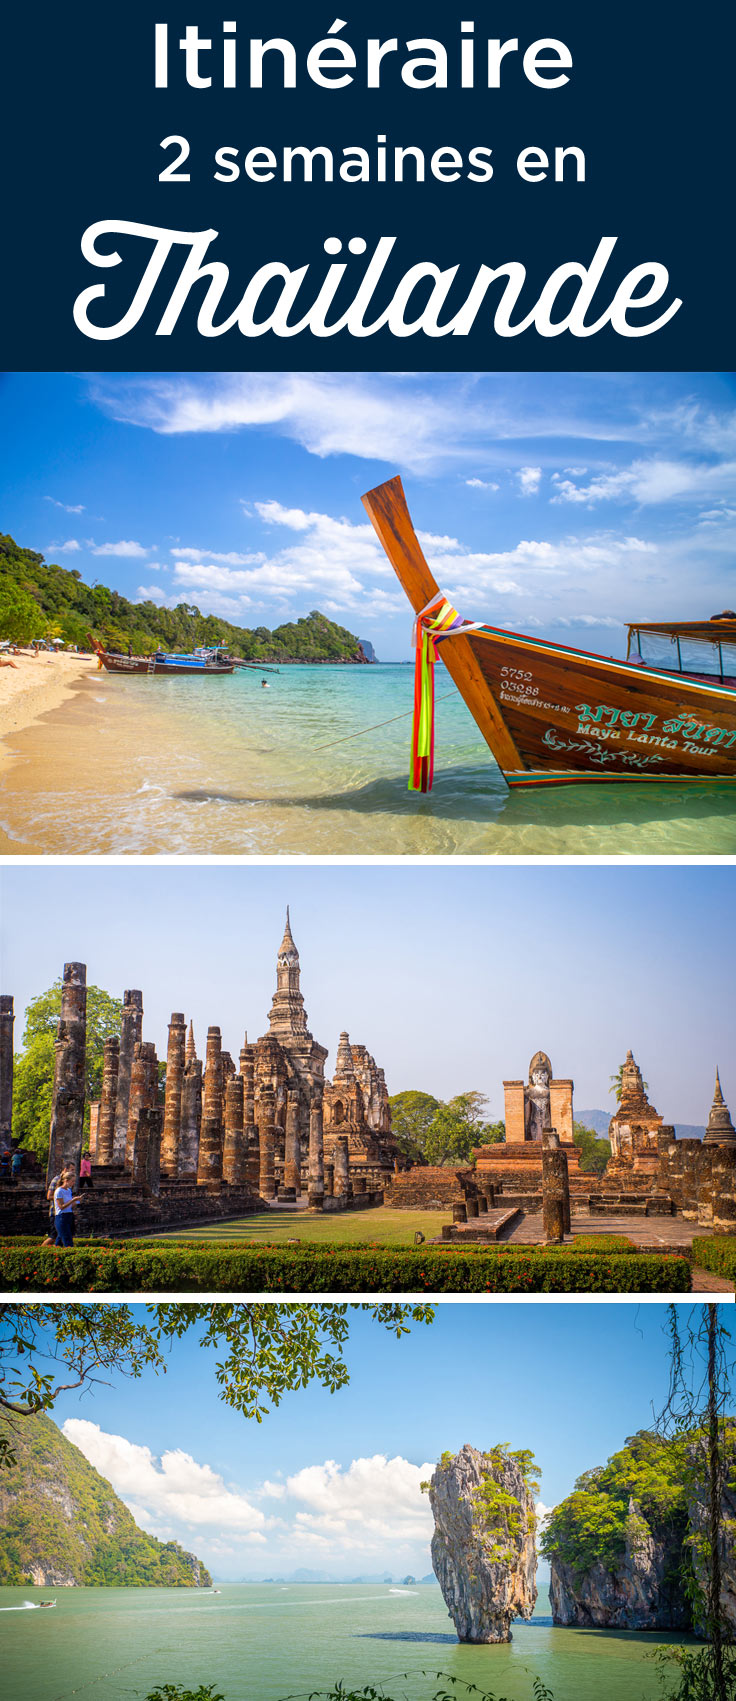 itineraire 2 semaines en Thailande